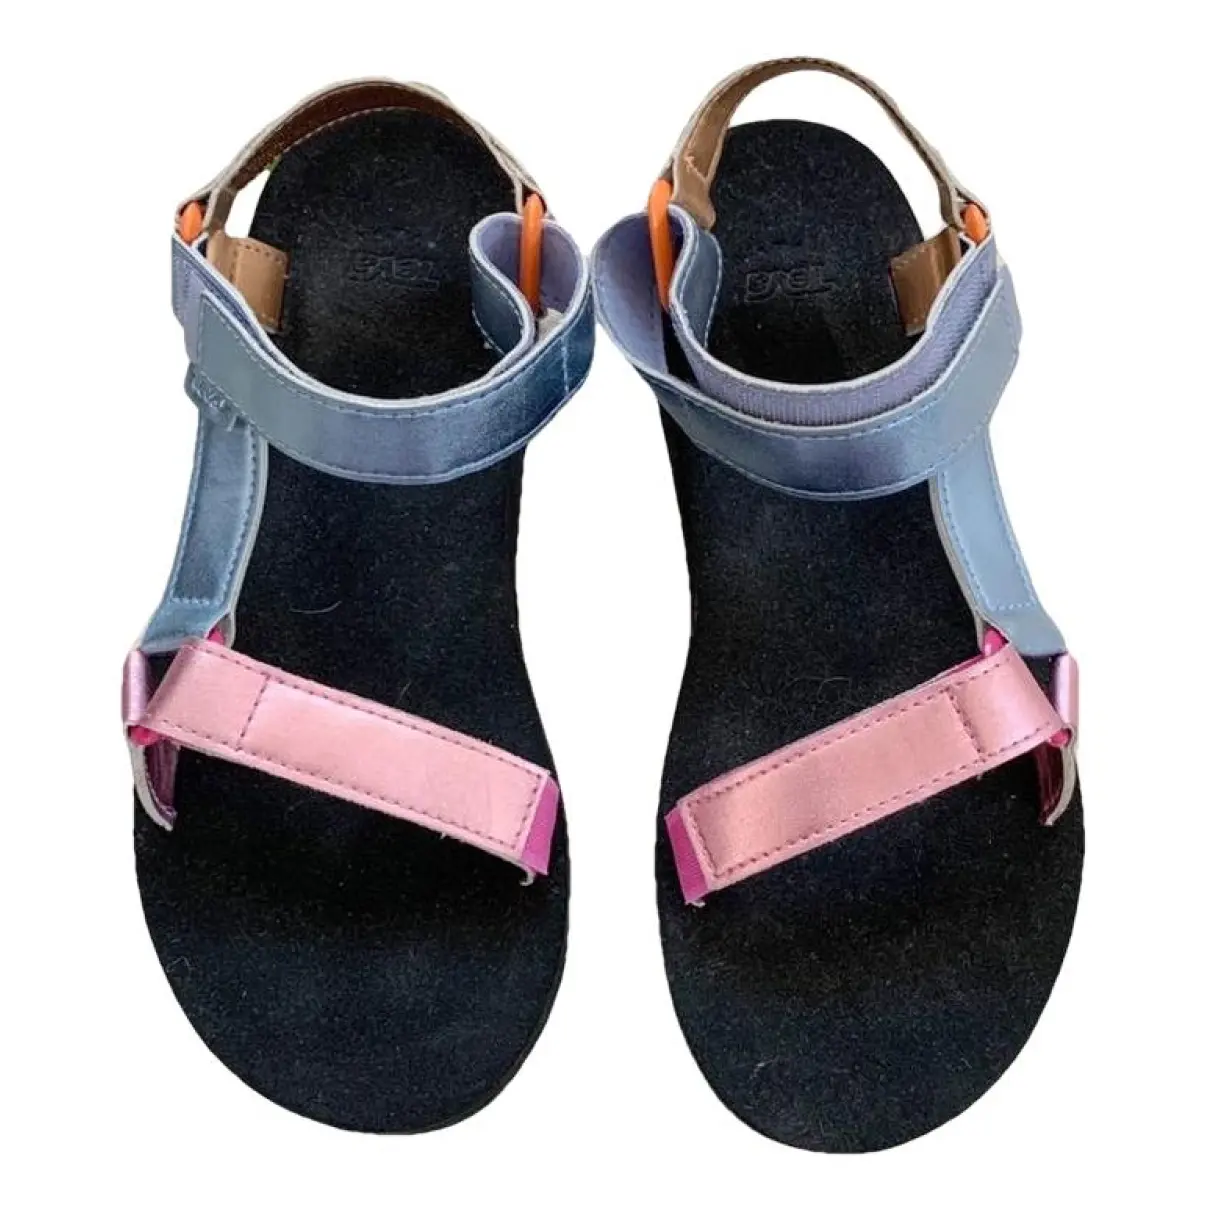 Cloth sandal